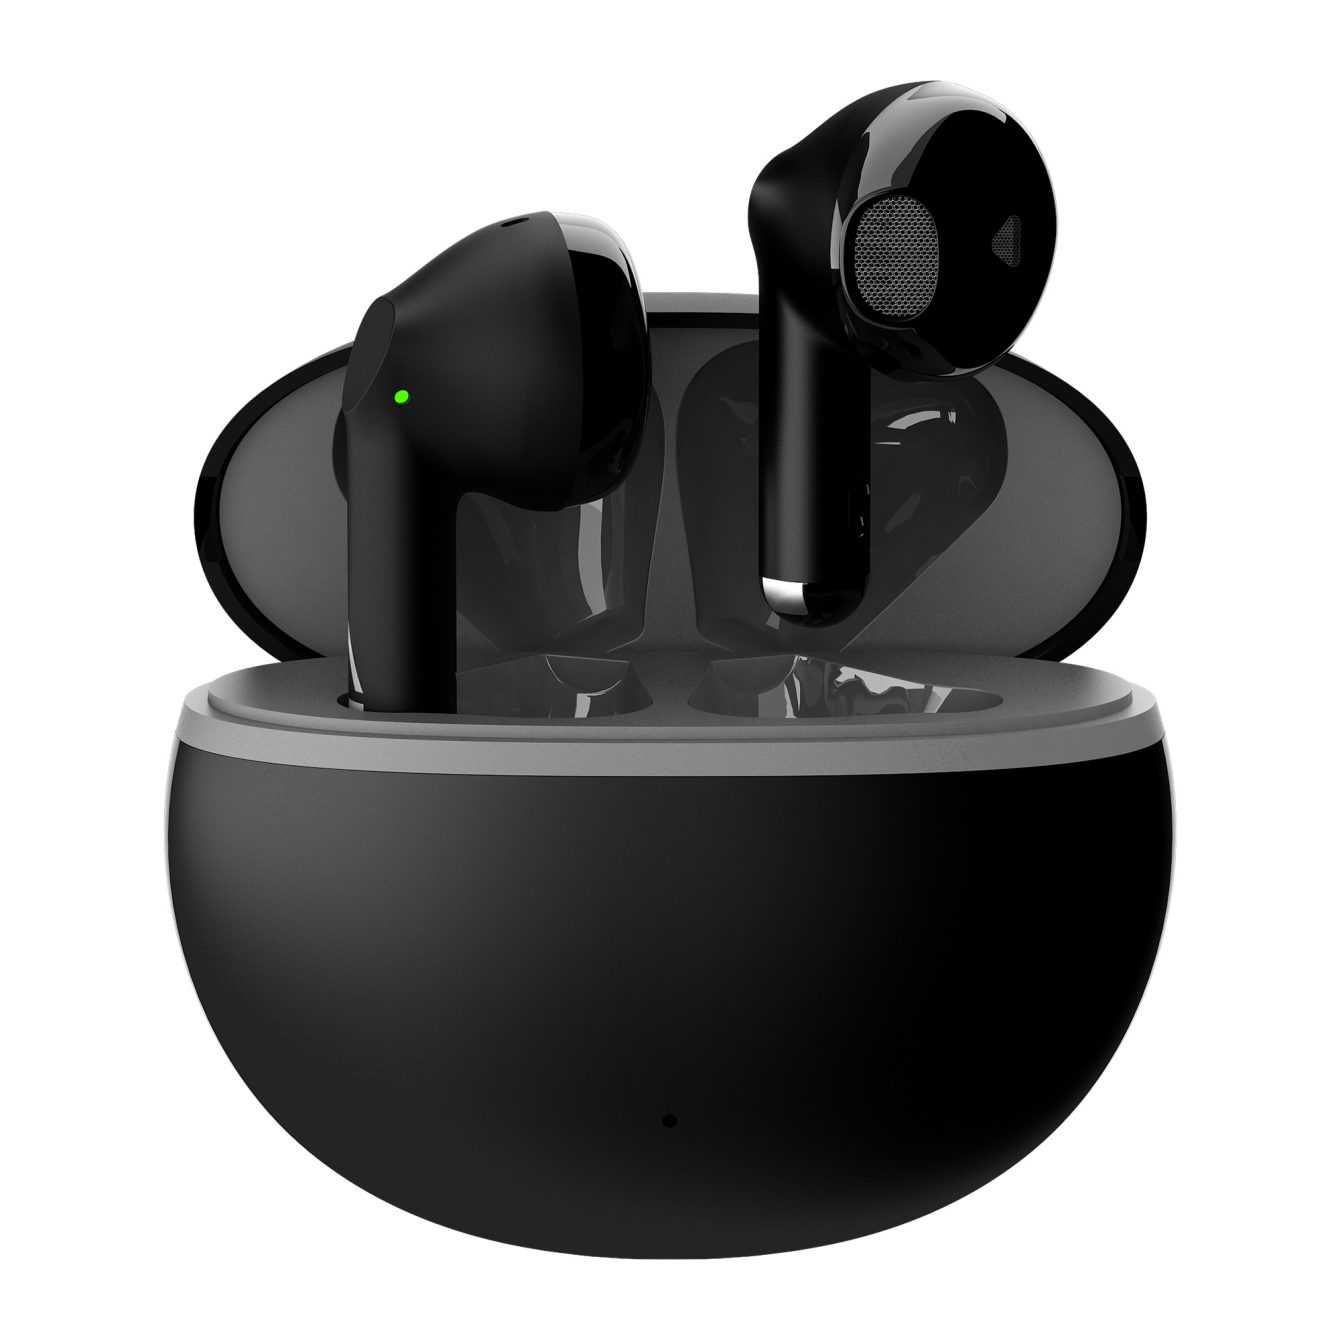 Creative Zen Air DOT: Creative's new true wireless in-ear headphones